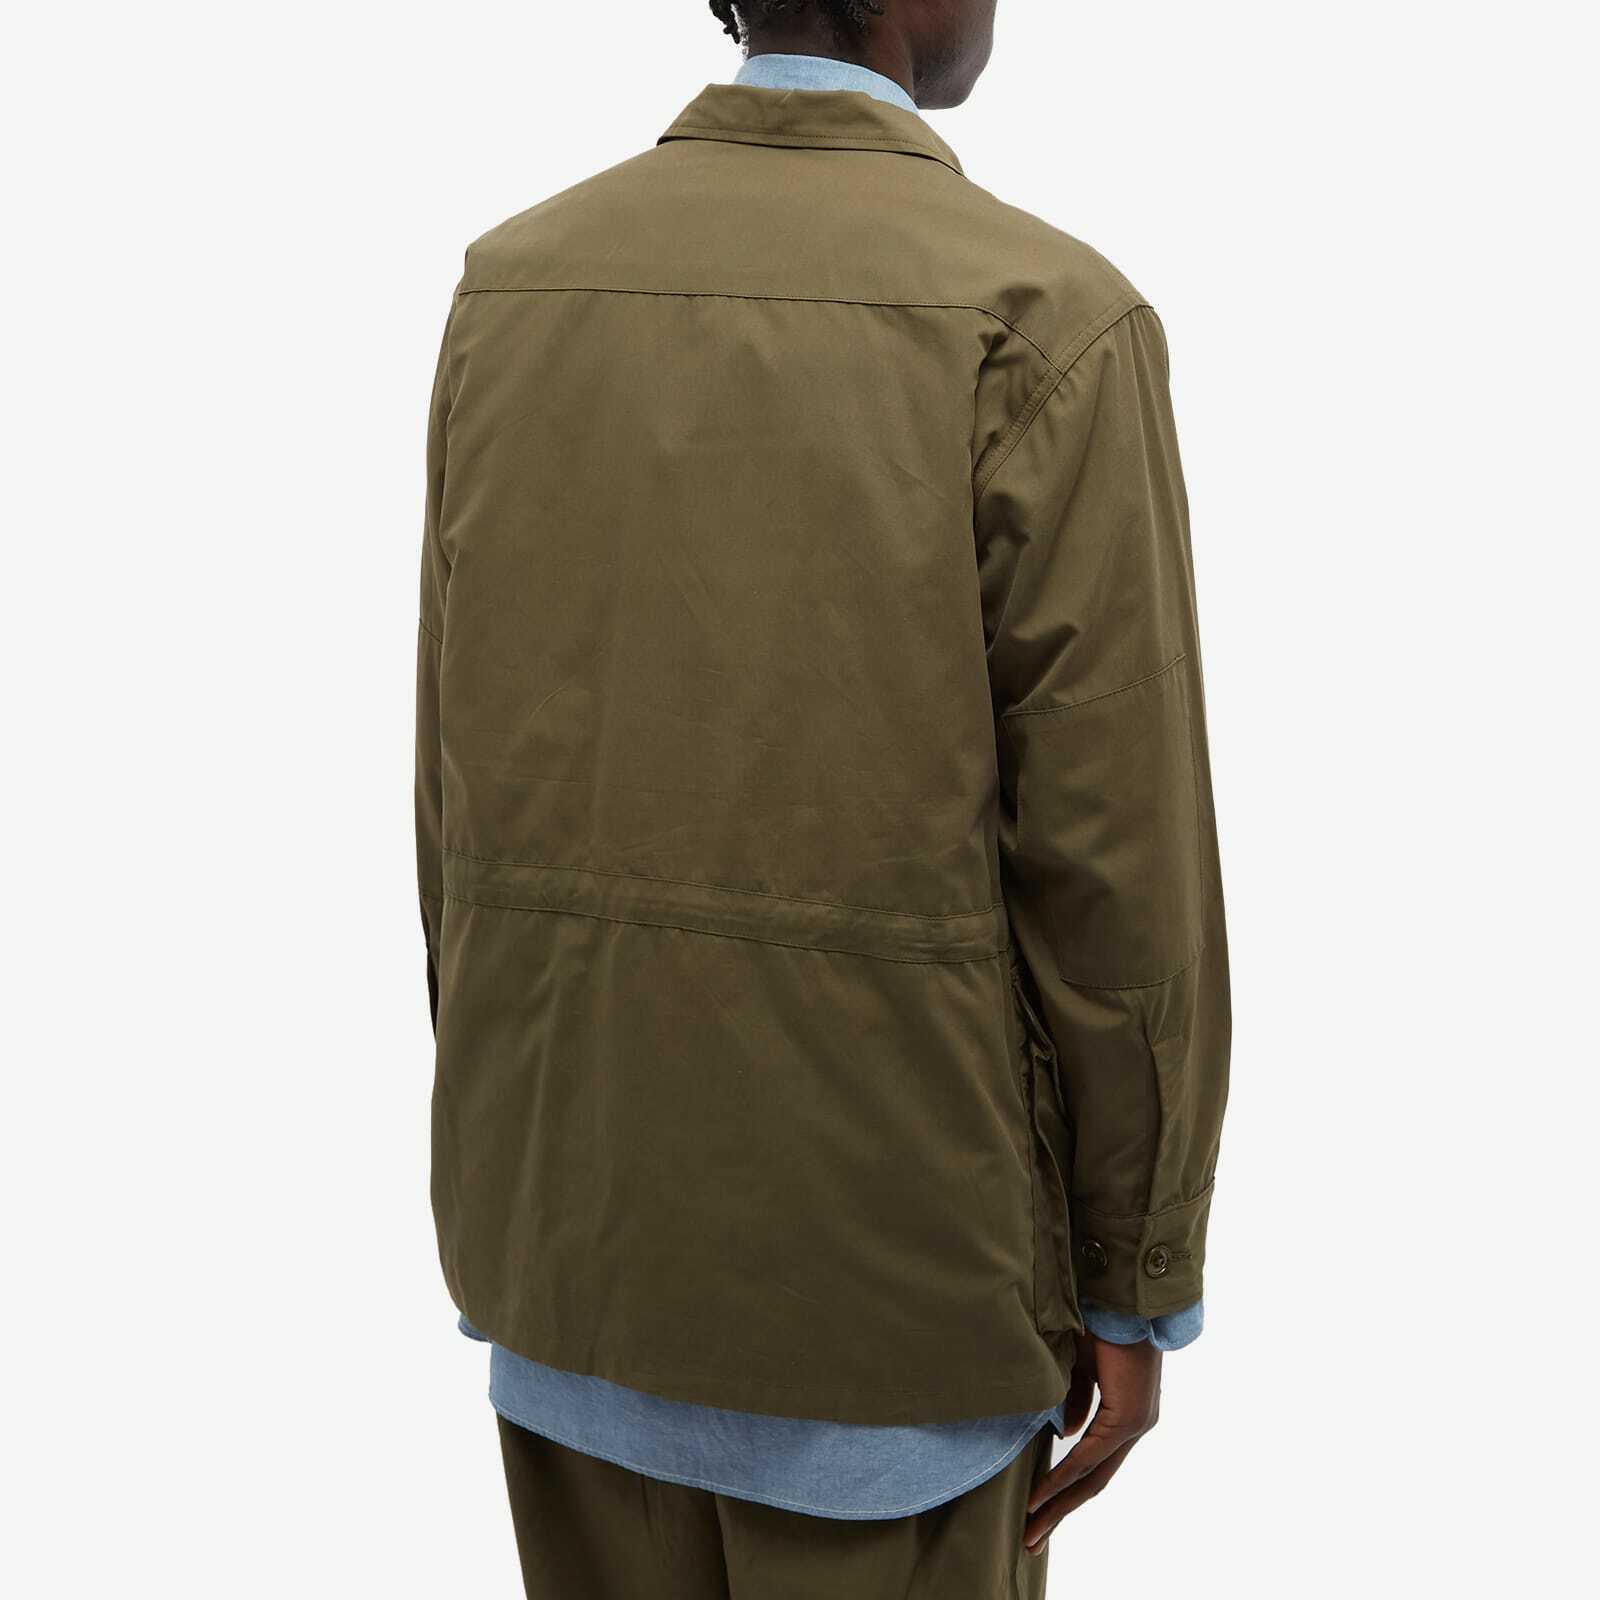 Monitaly Men's Type B Military Half Coat in Vancloth Oxford Olive Monitaly